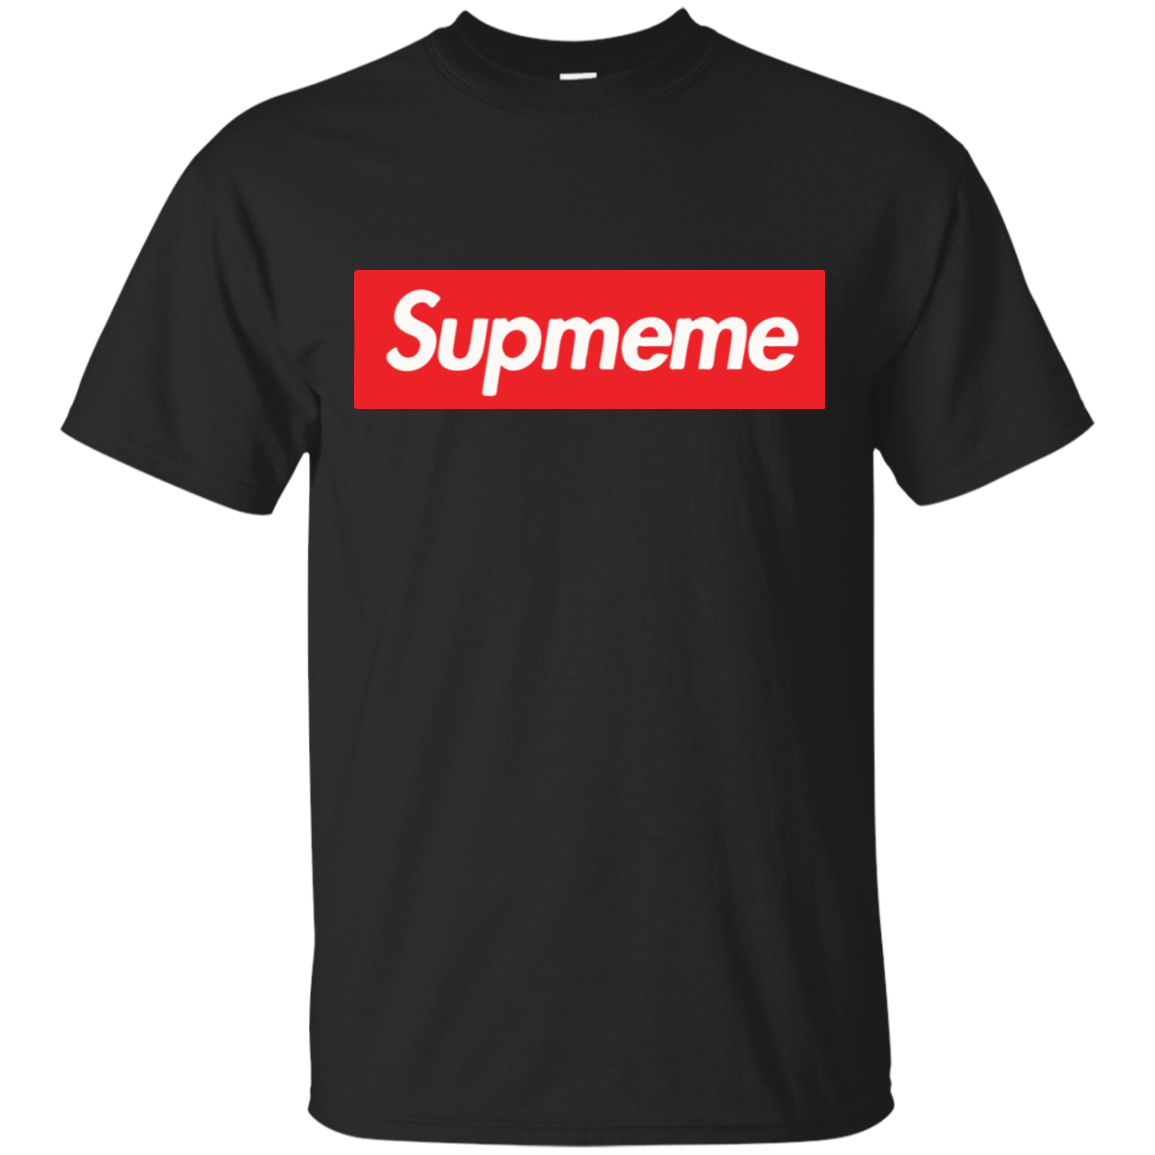 Cheap Supreme T-shirts OnSale, Discount Supreme T-shirts Free Shipping!